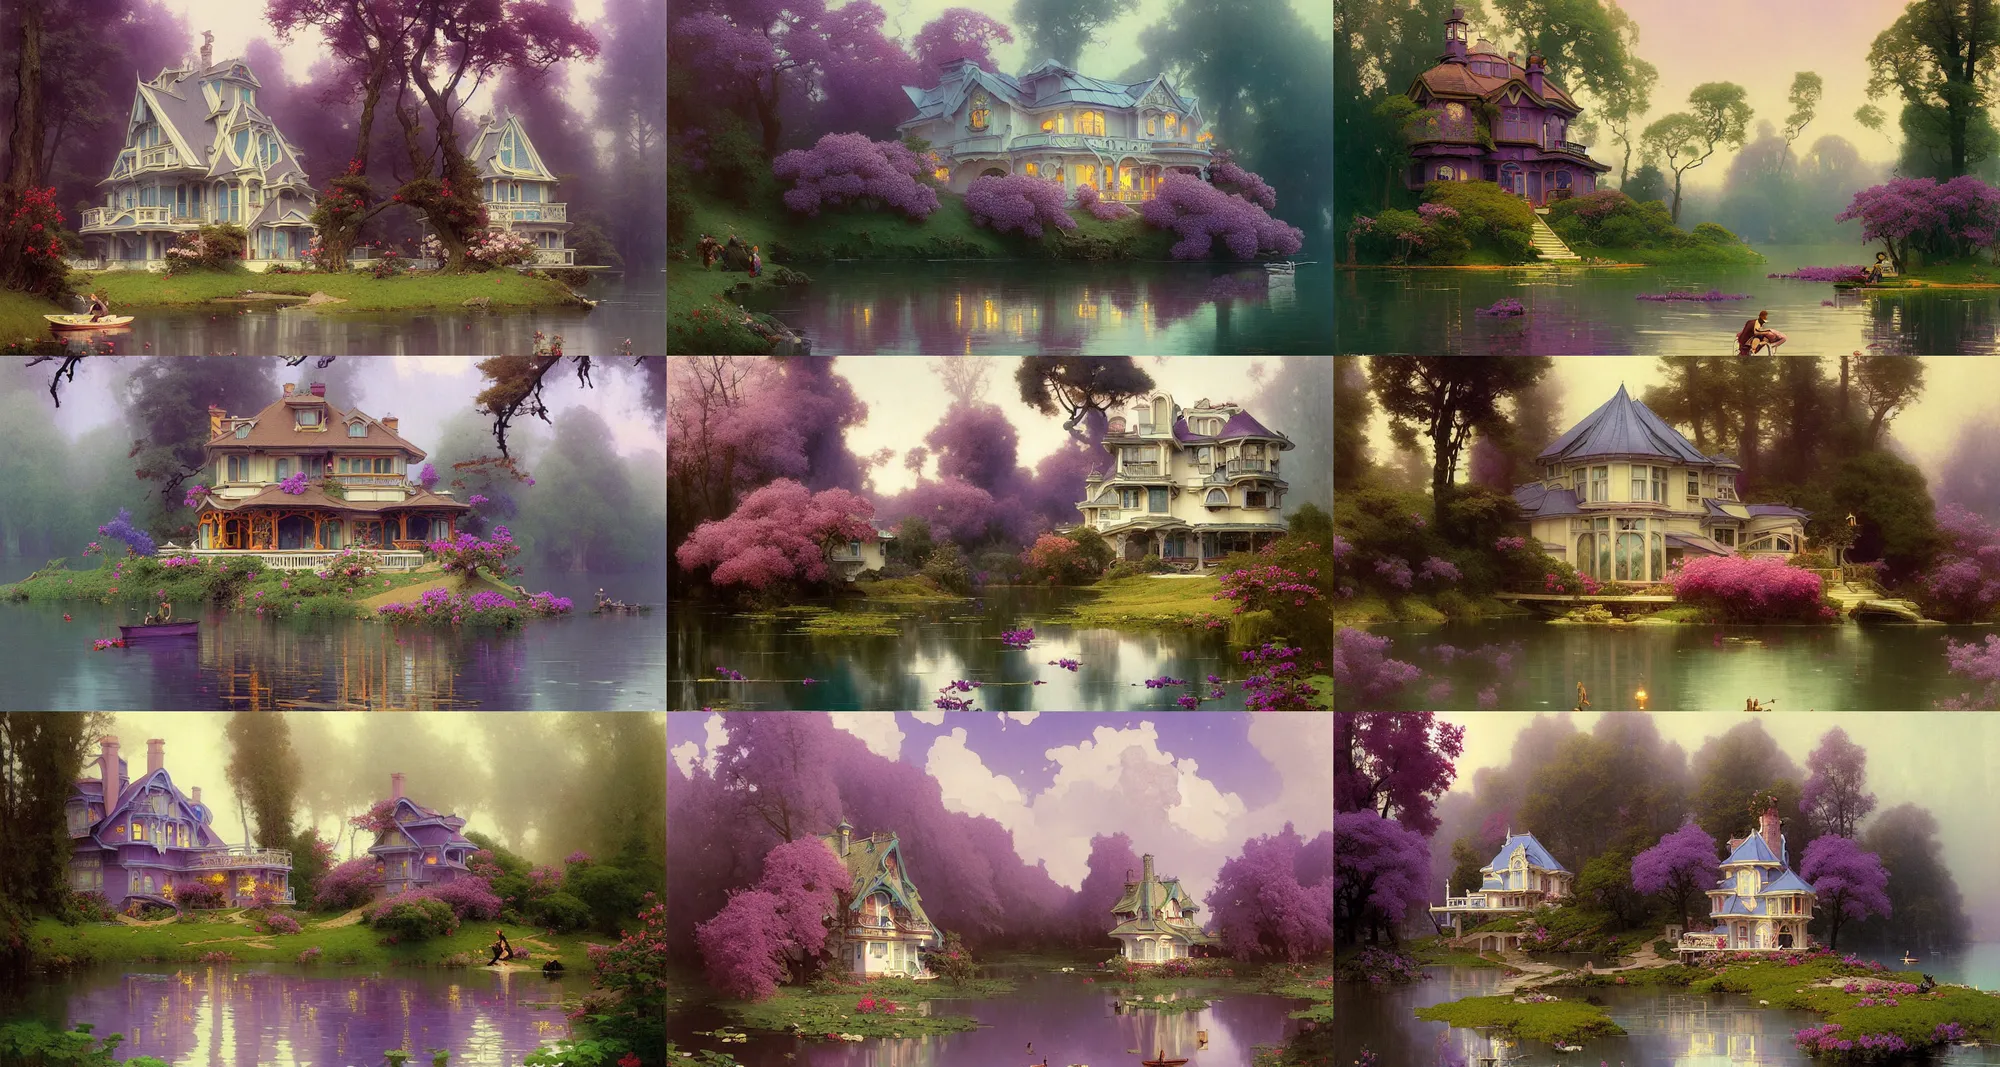 Prompt: small lake house in lilac bushes, art nouveau architecture, fantasy, art by joseph leyendecker, peter mohrbacher, ivan aivazovsky, ruan jia, reza afshar, marc simonetti, alphonse mucha